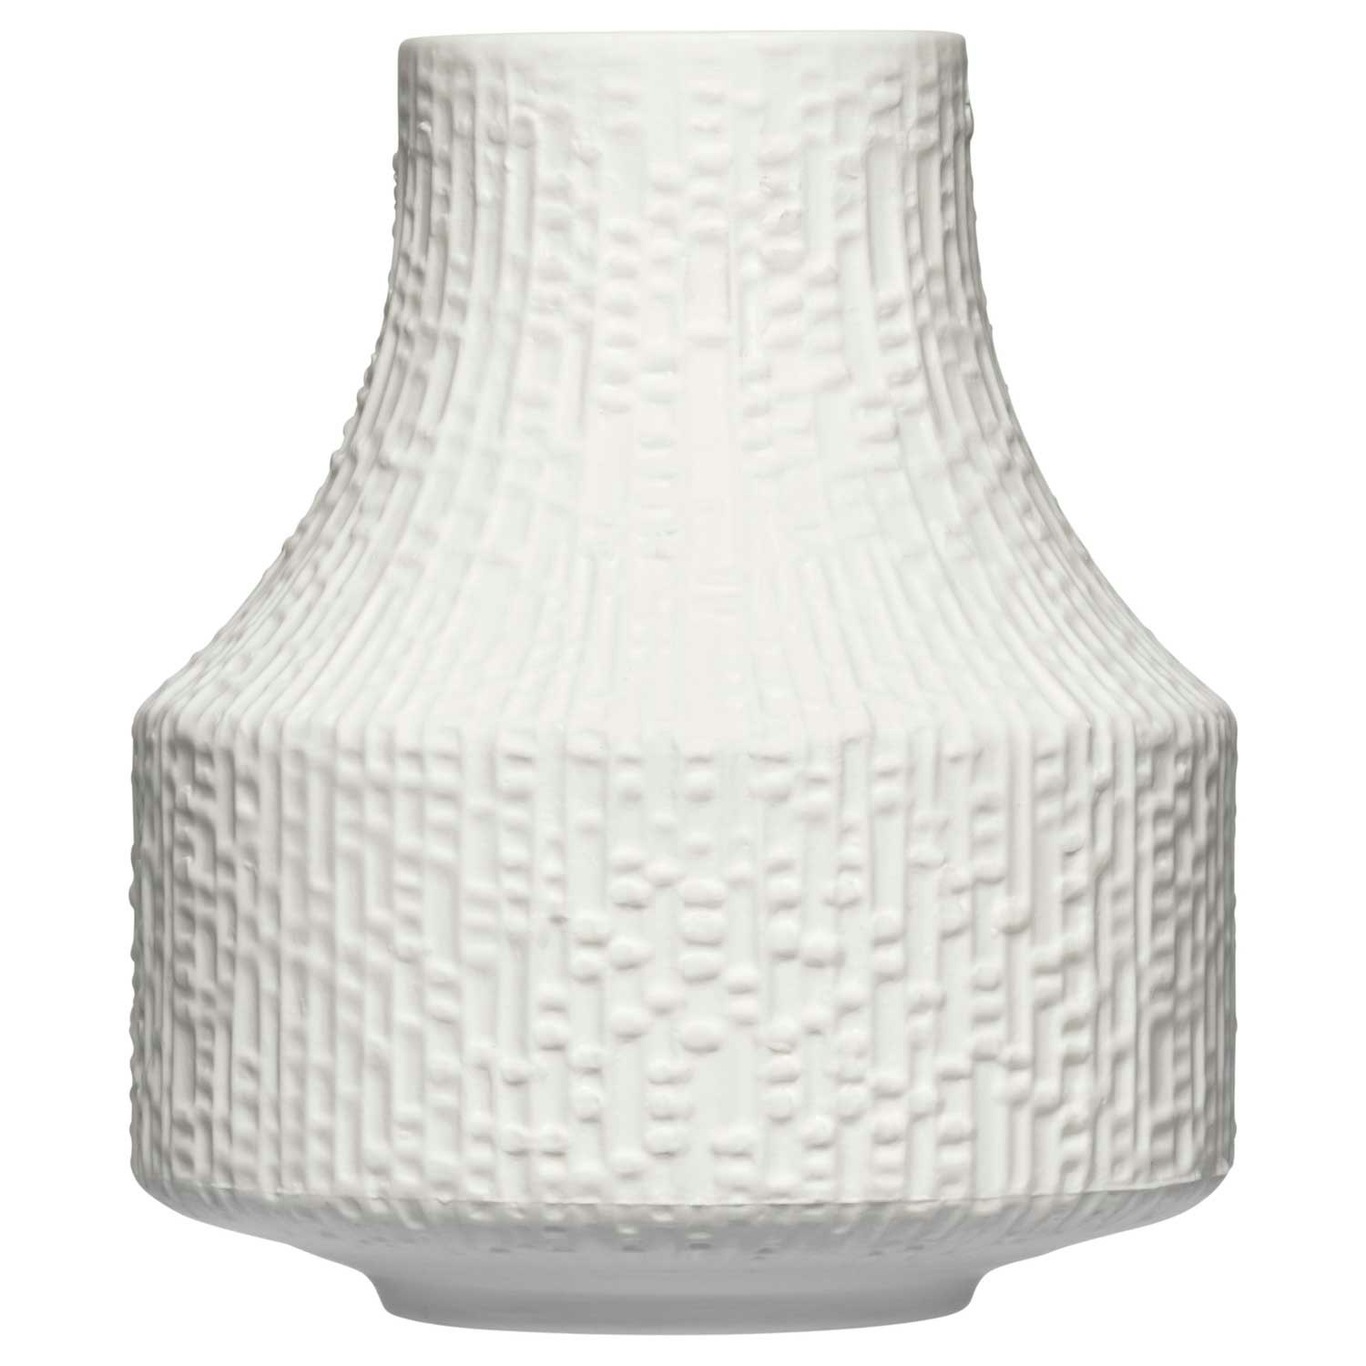 Ultima Thule Vase White, 8,5x9,5 cm